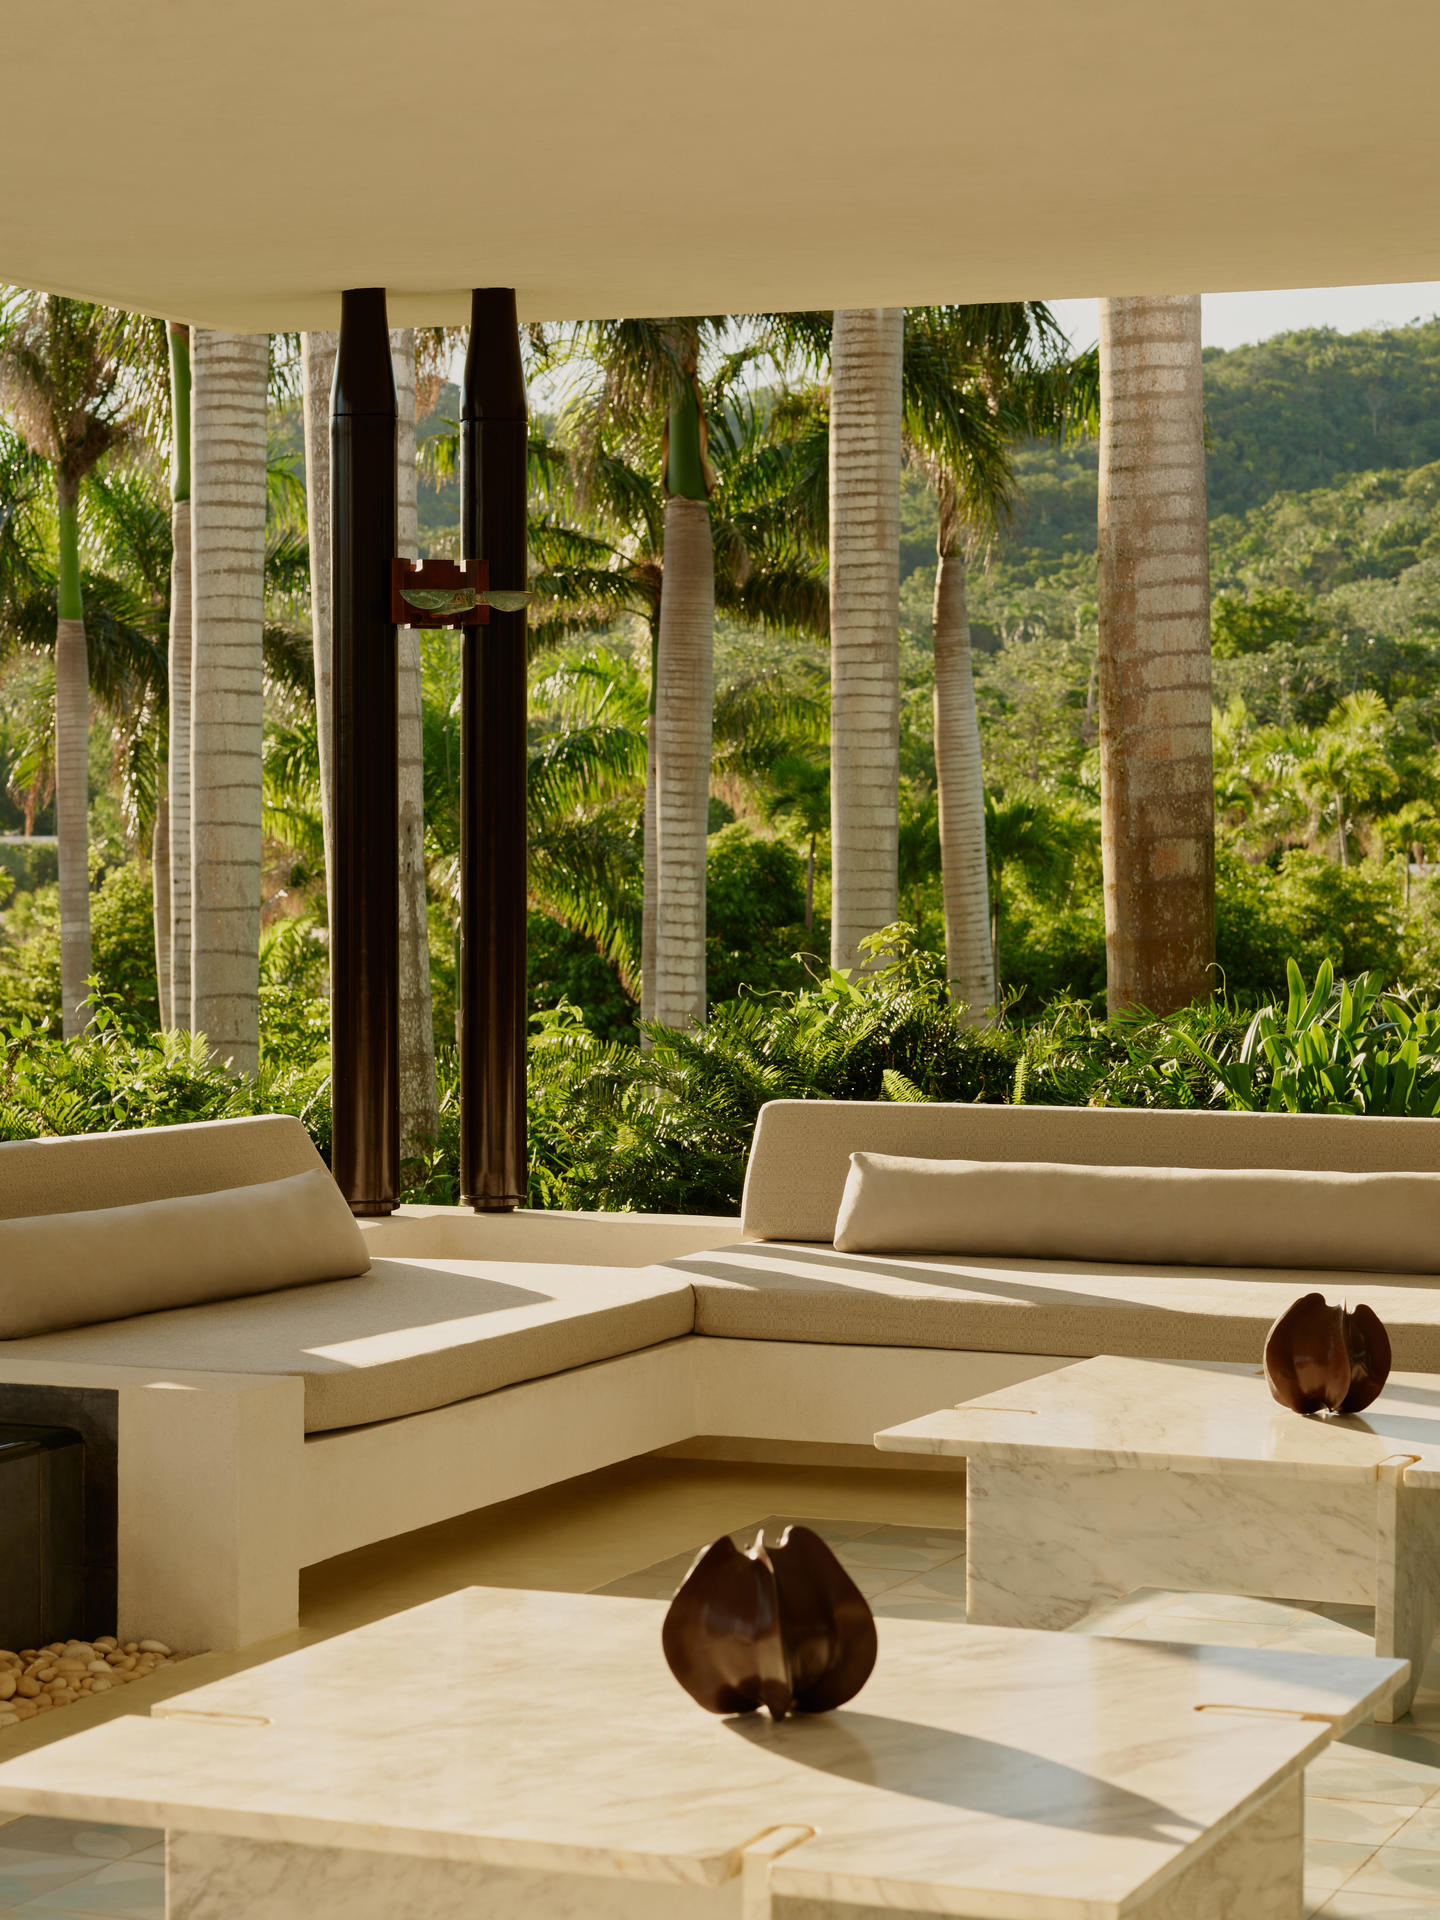 Amanera-Dominican Republic Resort-Welcome-Lobby.